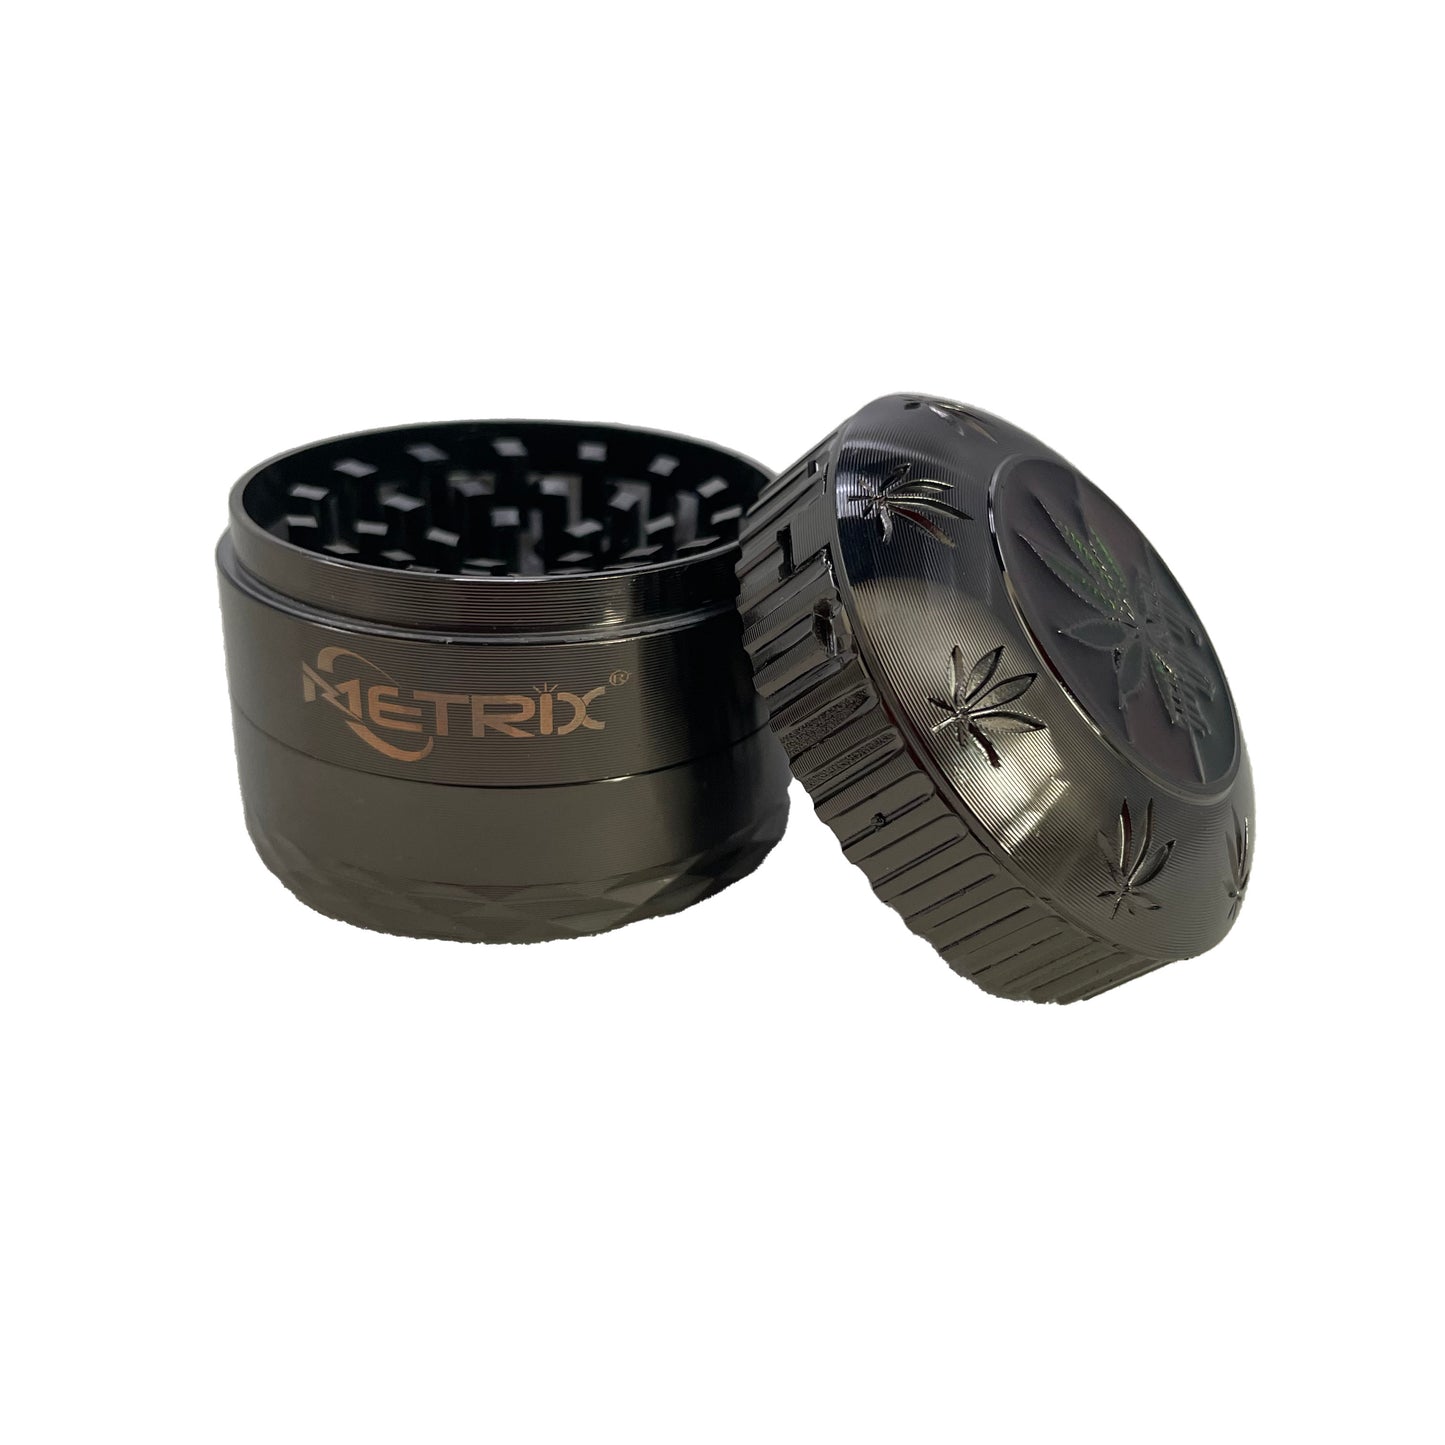 Metrix 4 Chamber Grinder with Extra Closet